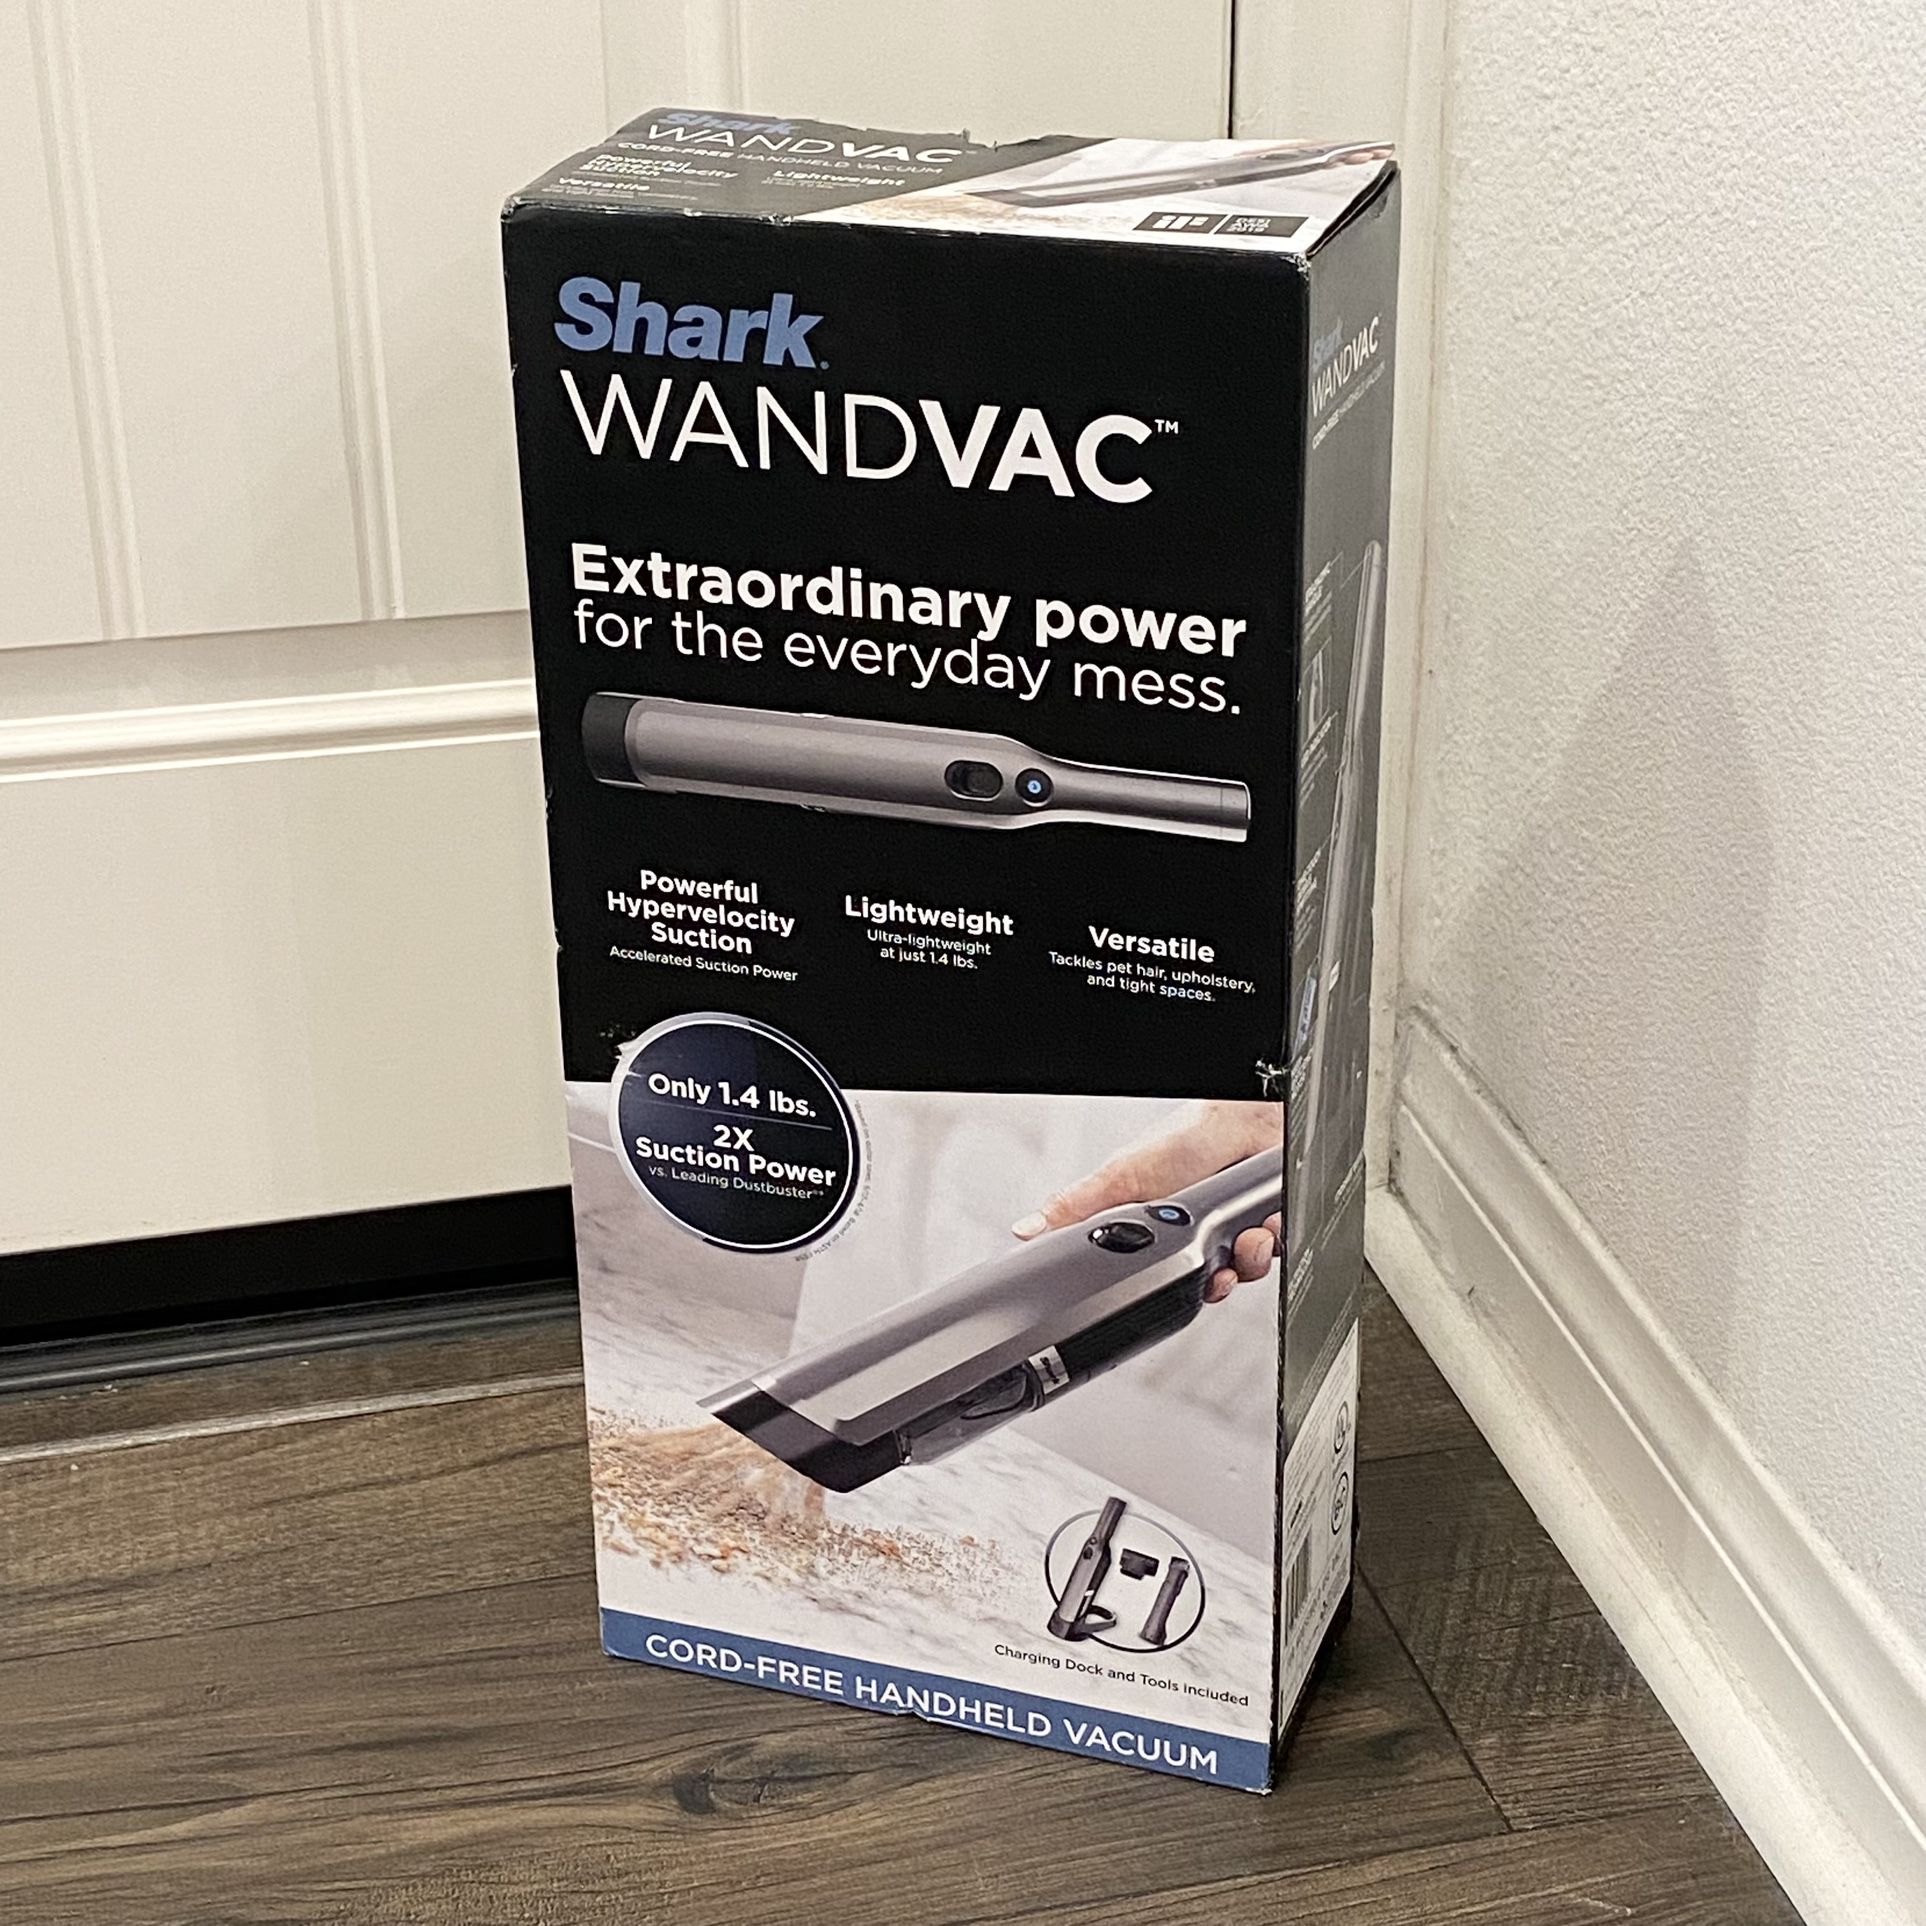 NEW Shark WANDVAC Handheld Vacuum Cleaner, Lightweight with Powerful Suction, Charging Dock. WV201